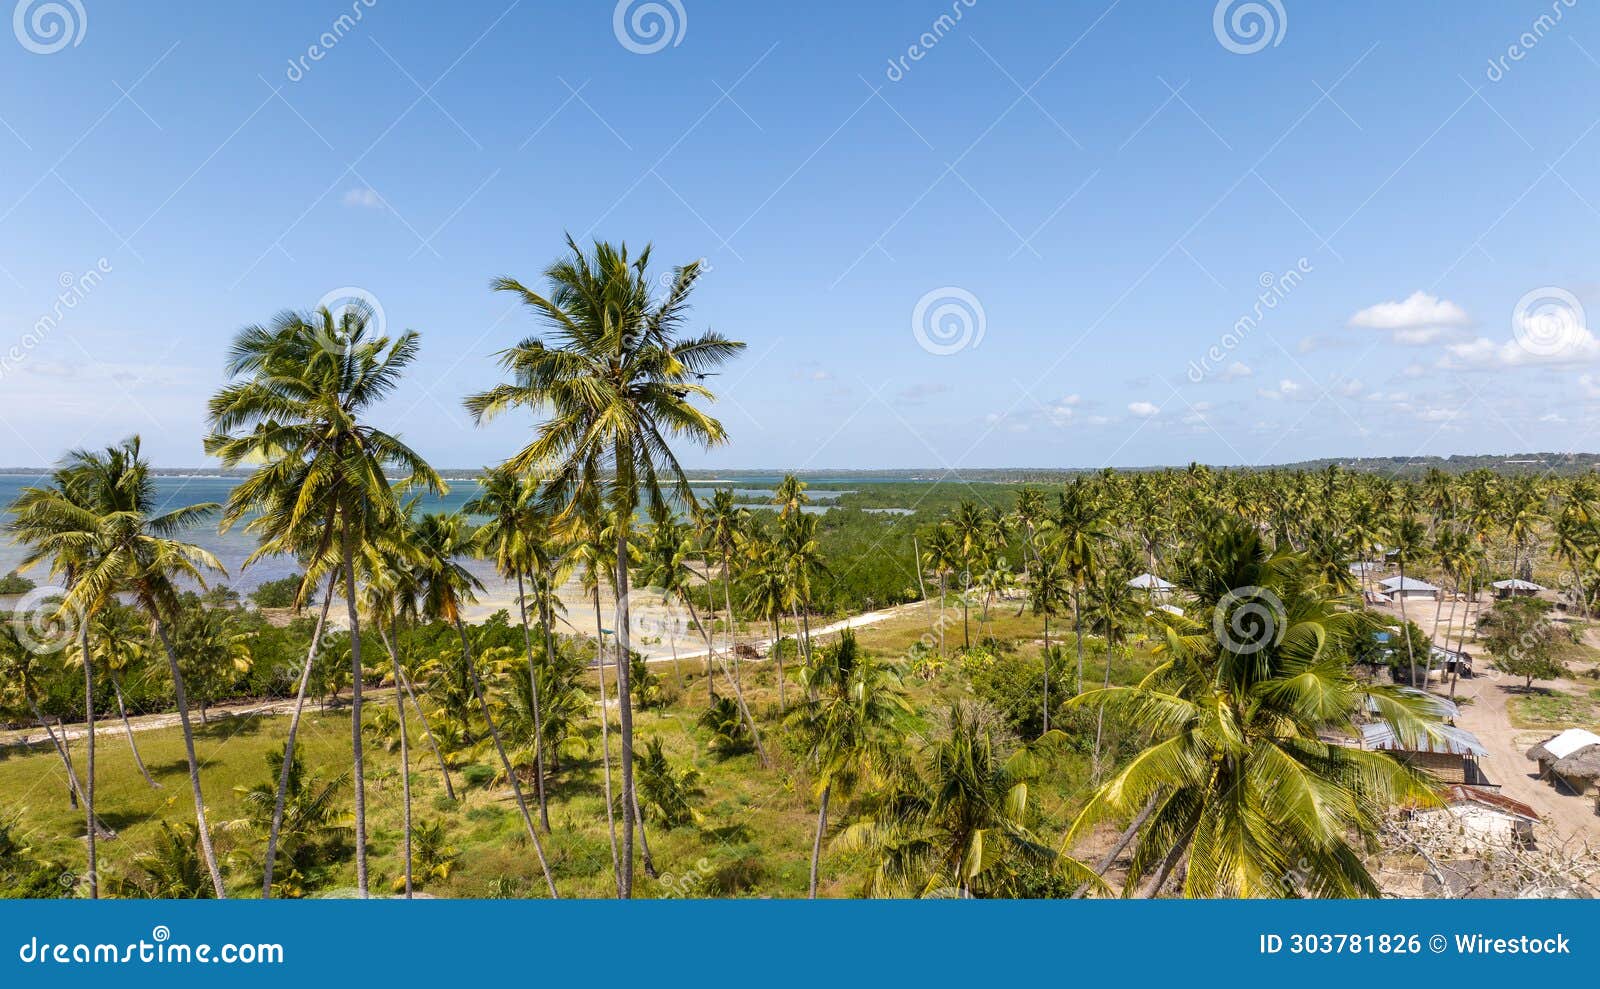 picturesque scene of mocimboa da praia on a sunny day in cabo delgado, mozambique